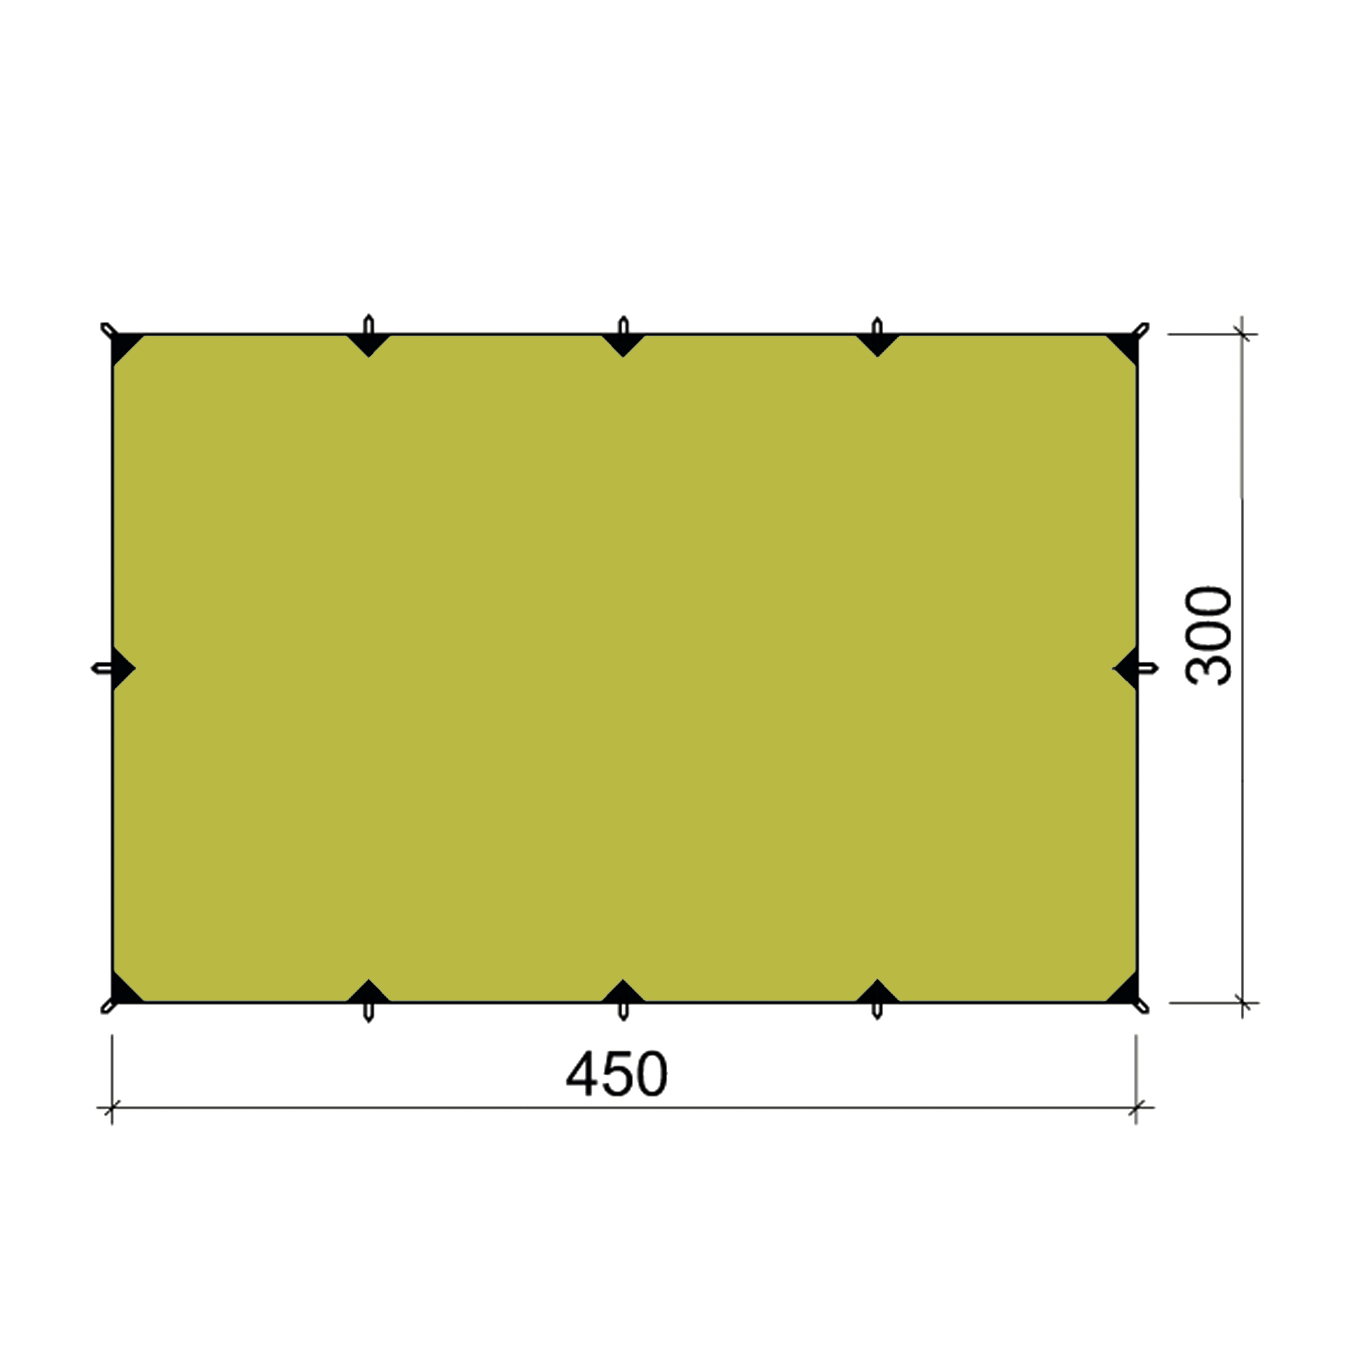 Тент BASK Canopy Silicone 3*4,5 Желтый